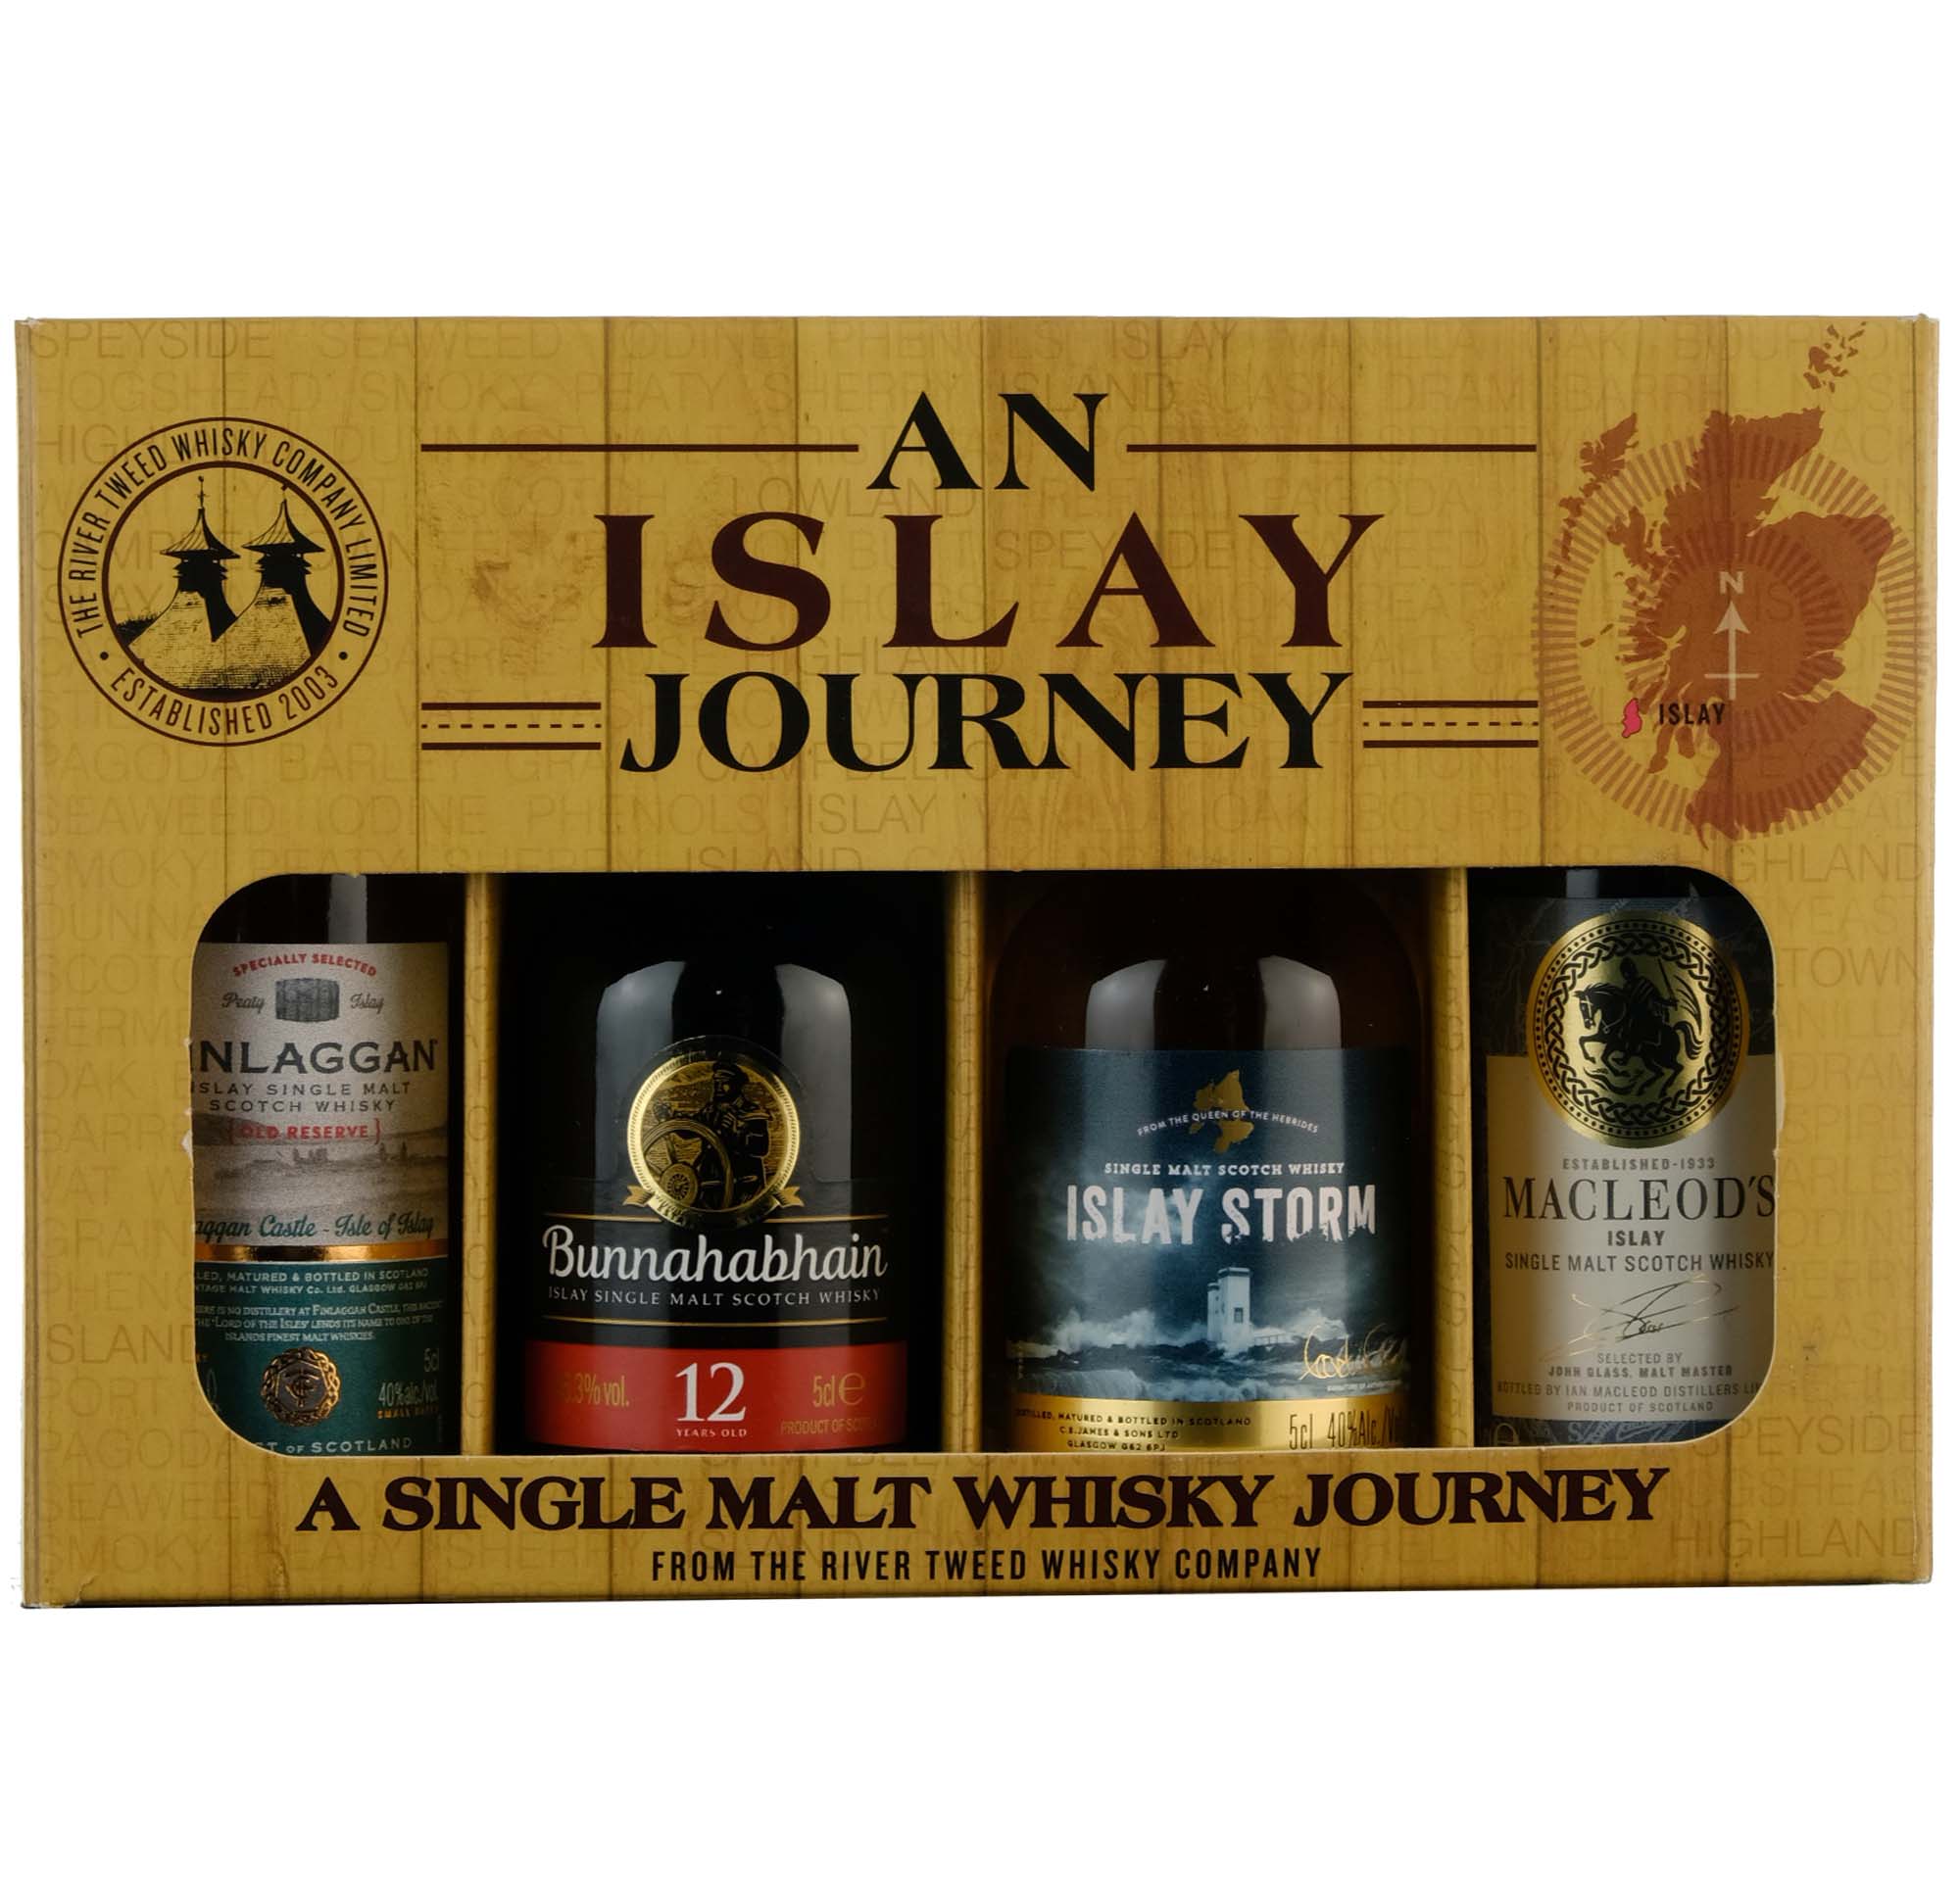 An Islay Journey Whisky Miniature Gift Set